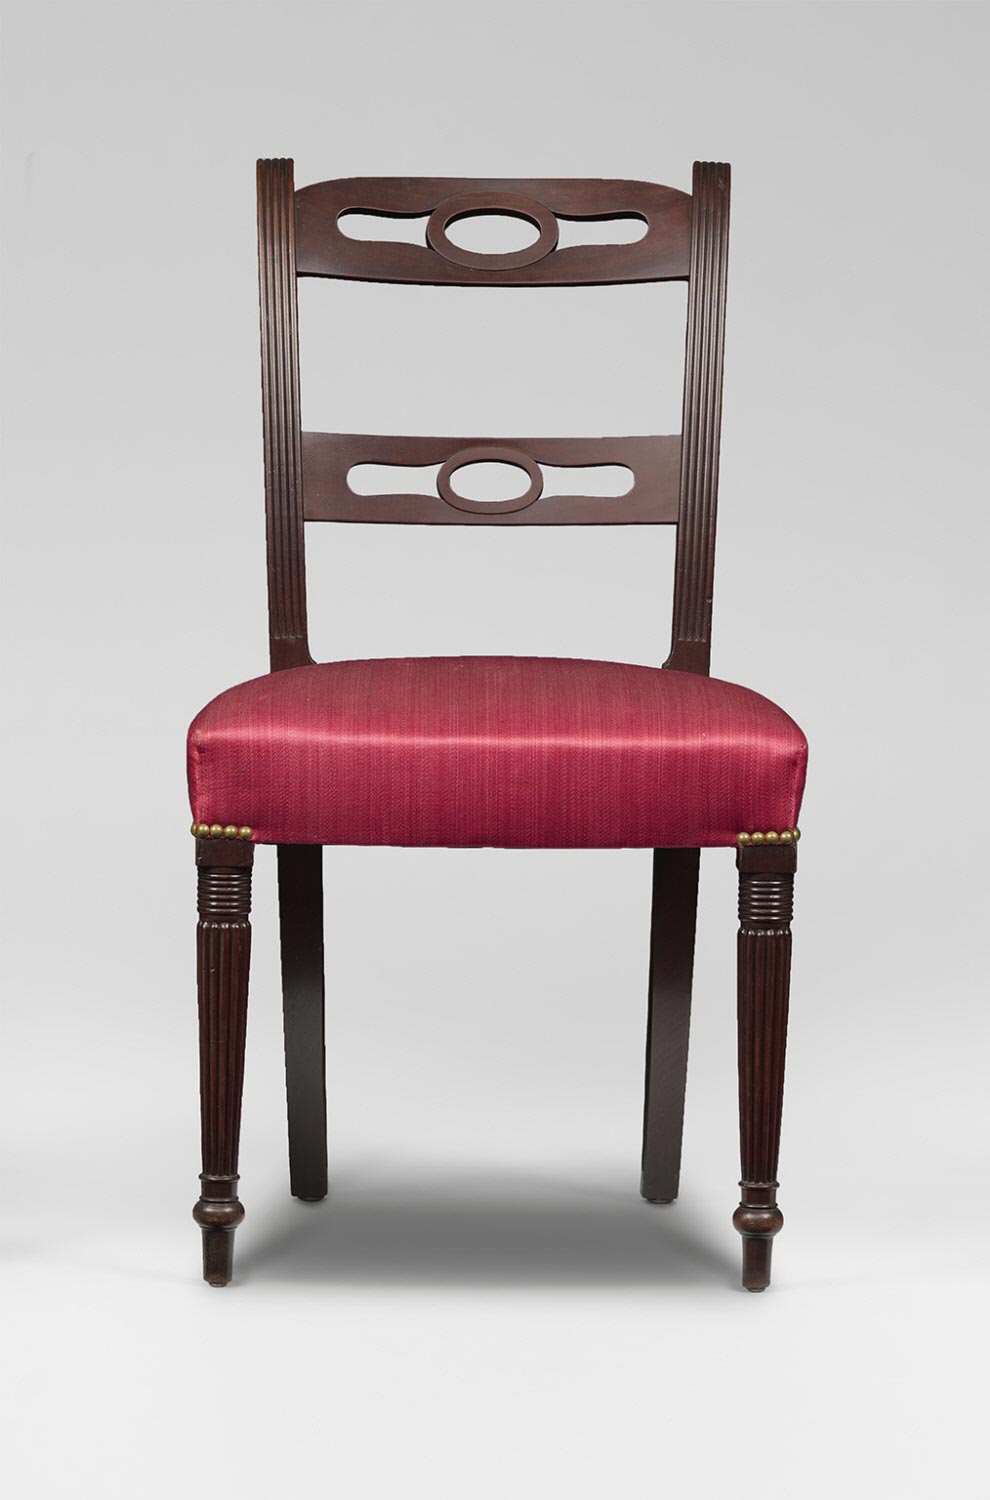 Thomas Whitecar (1784-1822)
Chair, 1809,
Mahogany, ash, pine, oak,
36 x 19 3/4 x 20 inches